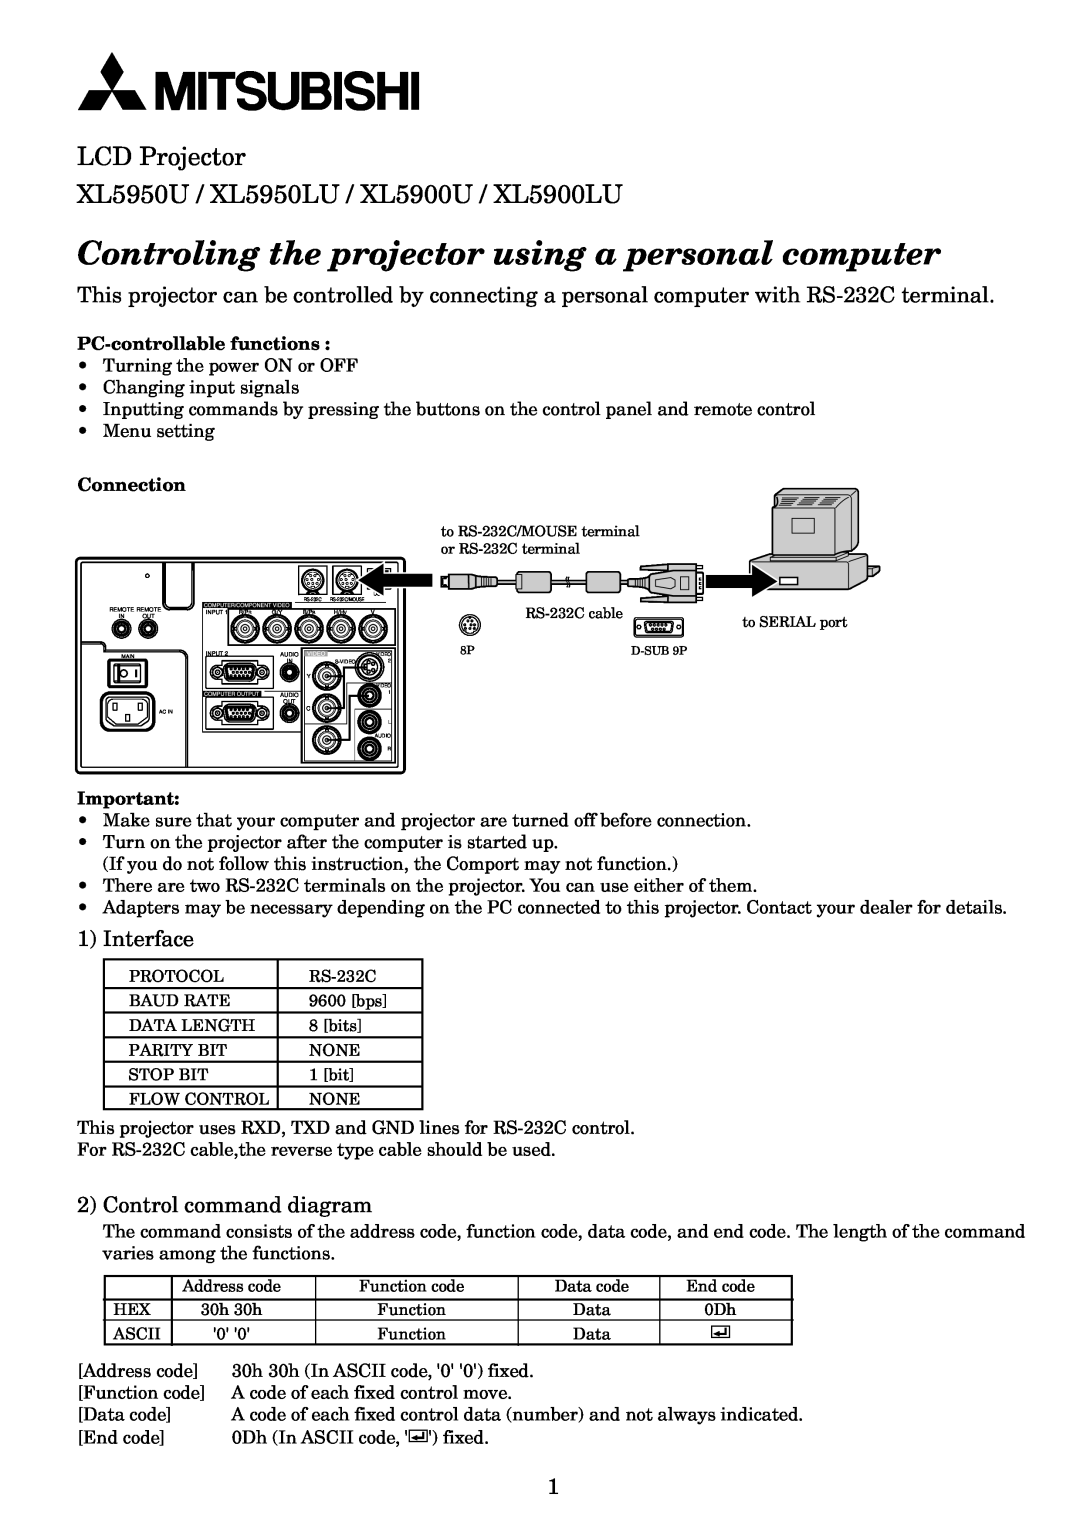 Mitsubishi Electronics XL5900U, XL5900LU manual Interface, Control command diagram, PC-controllable functions, Connection 